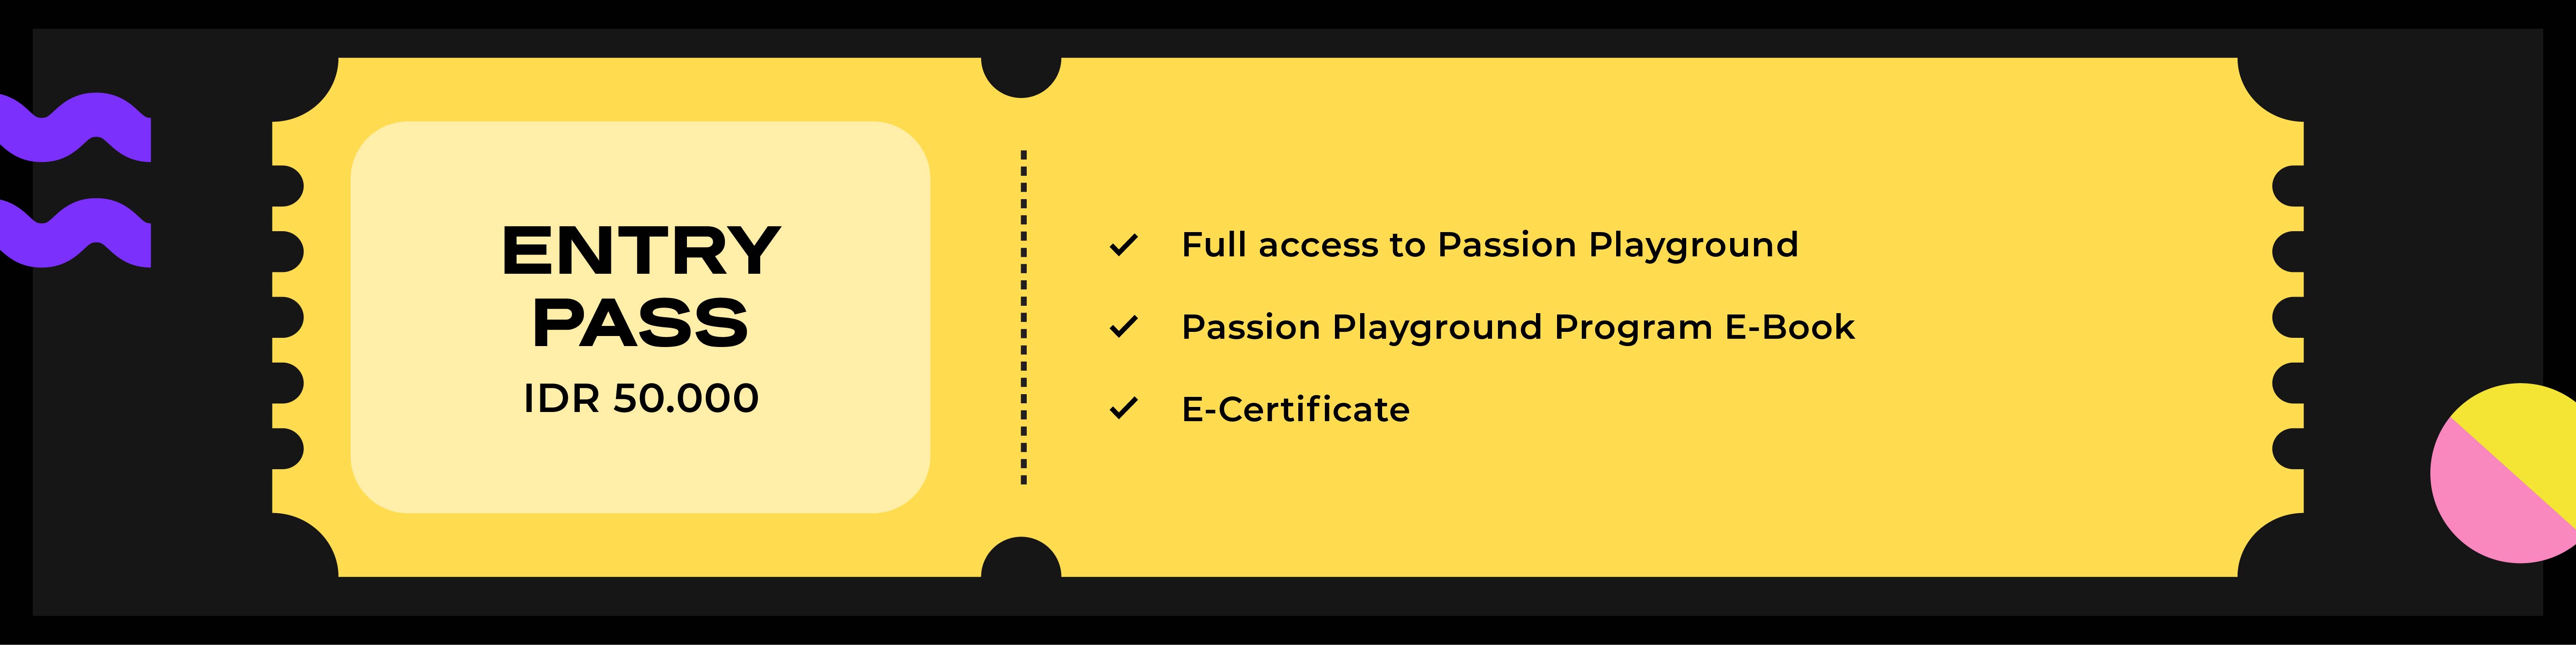 Passion Playground 2021 - Entry Pass